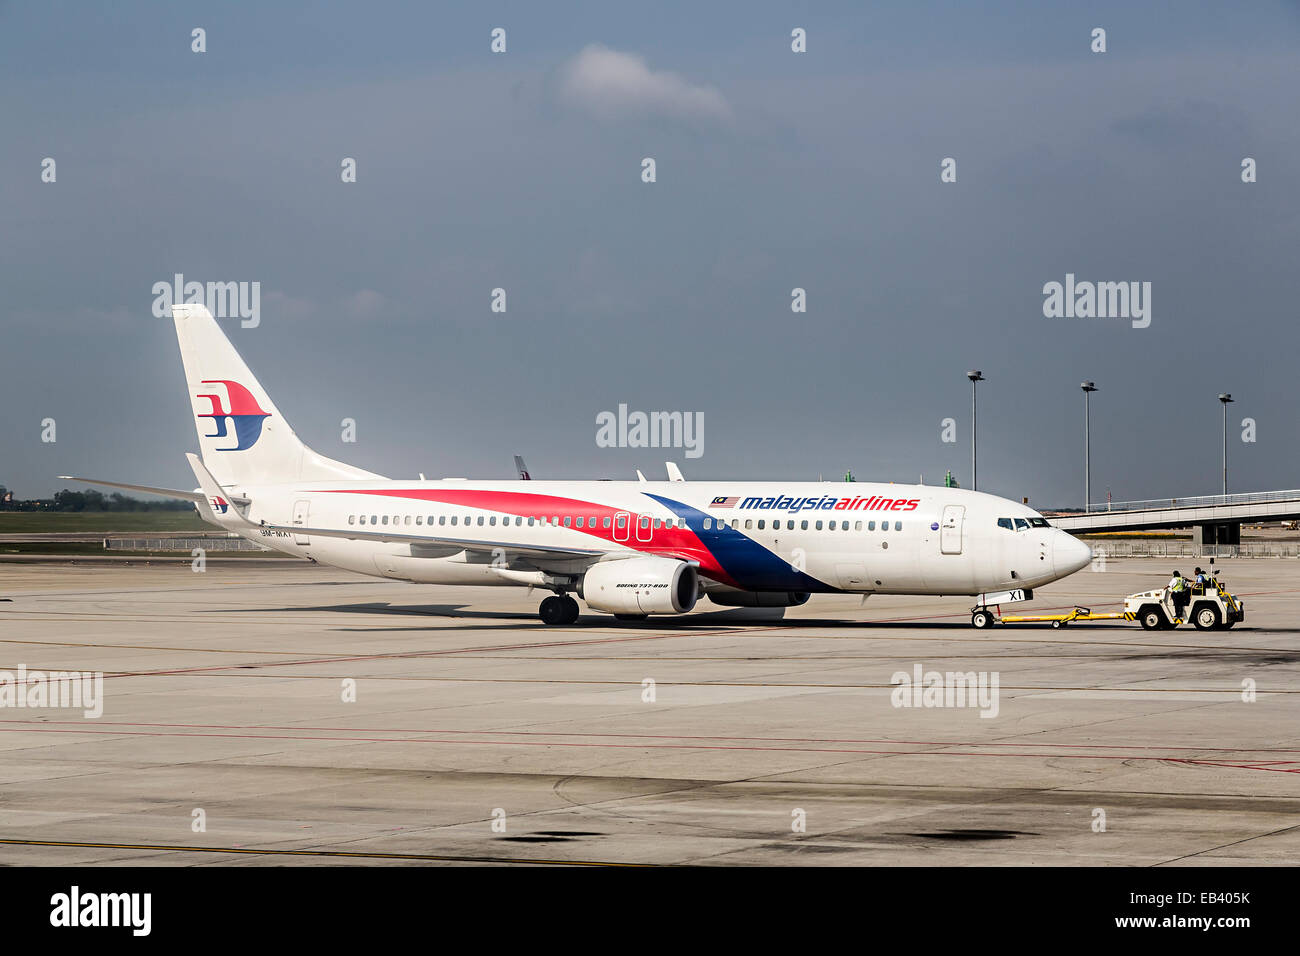 Malaysia Airlines aeromobili trainato su asfalto, Kuala Lumpur, Malesia Foto Stock